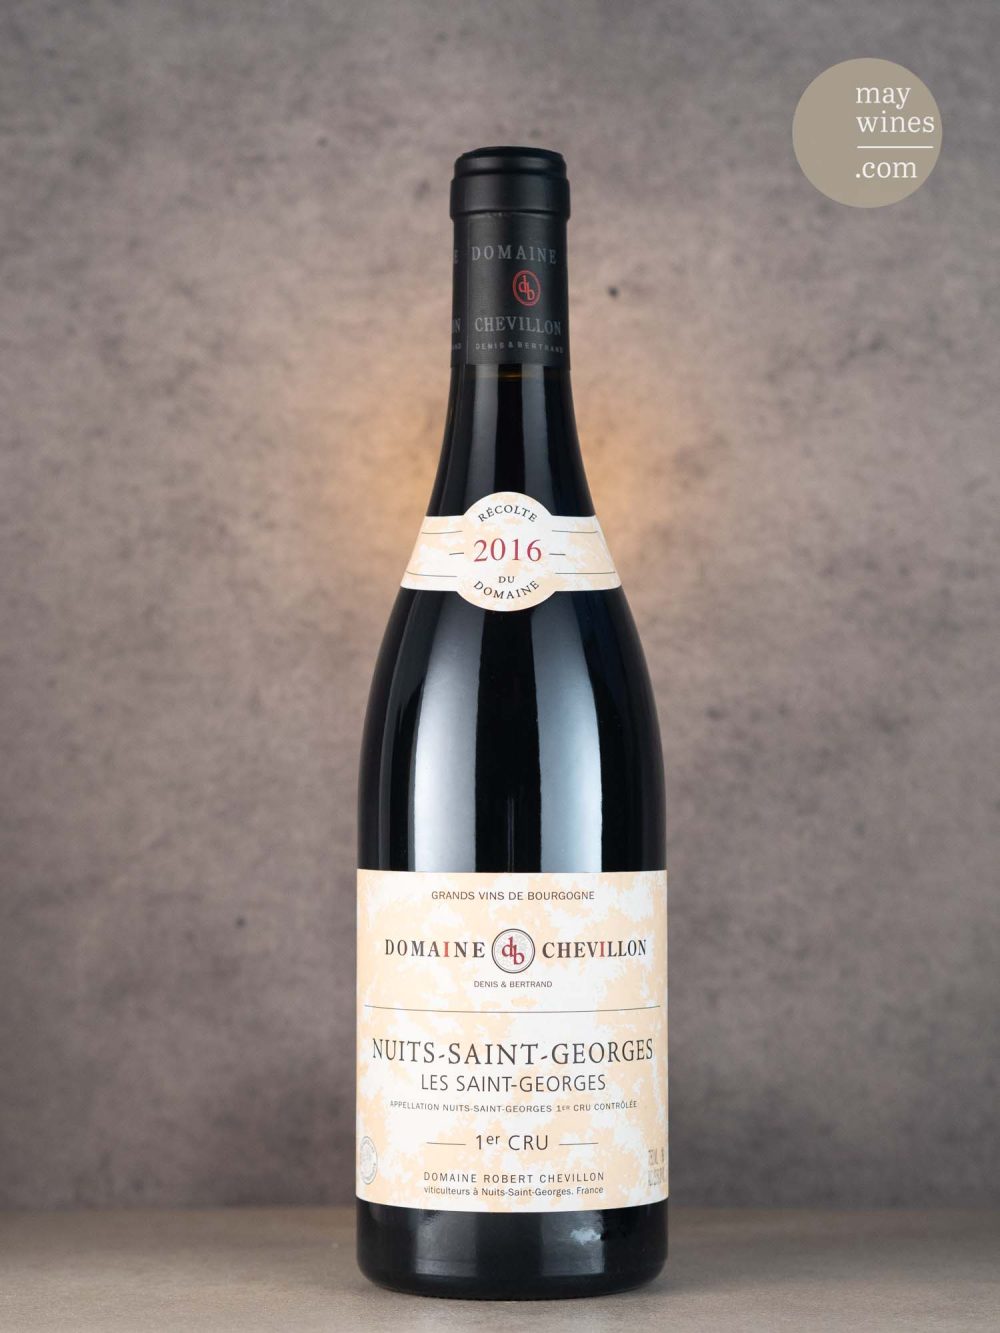 May Wines – Rotwein – 2016 Les Saint-Georges Premier Cru - Domaine Robert Chevillon